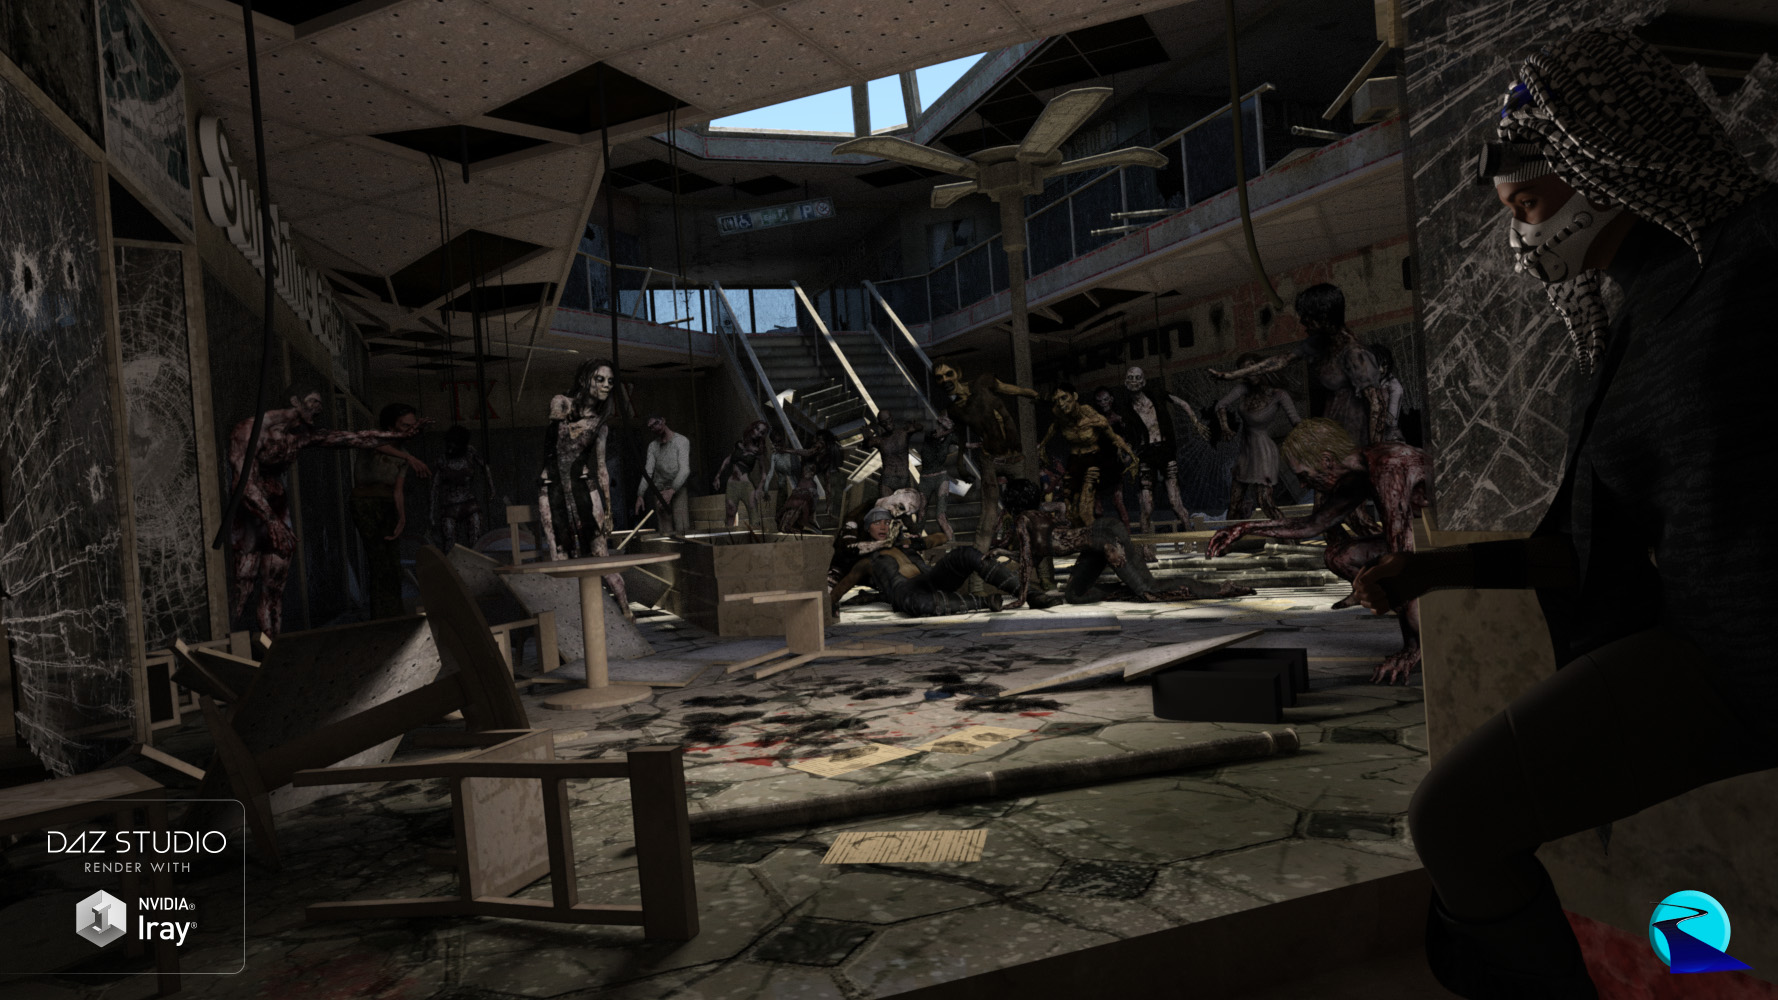 Now-Crowd Billboards - Undead Horde by: RiverSoft Art, 3D Models by Daz 3D